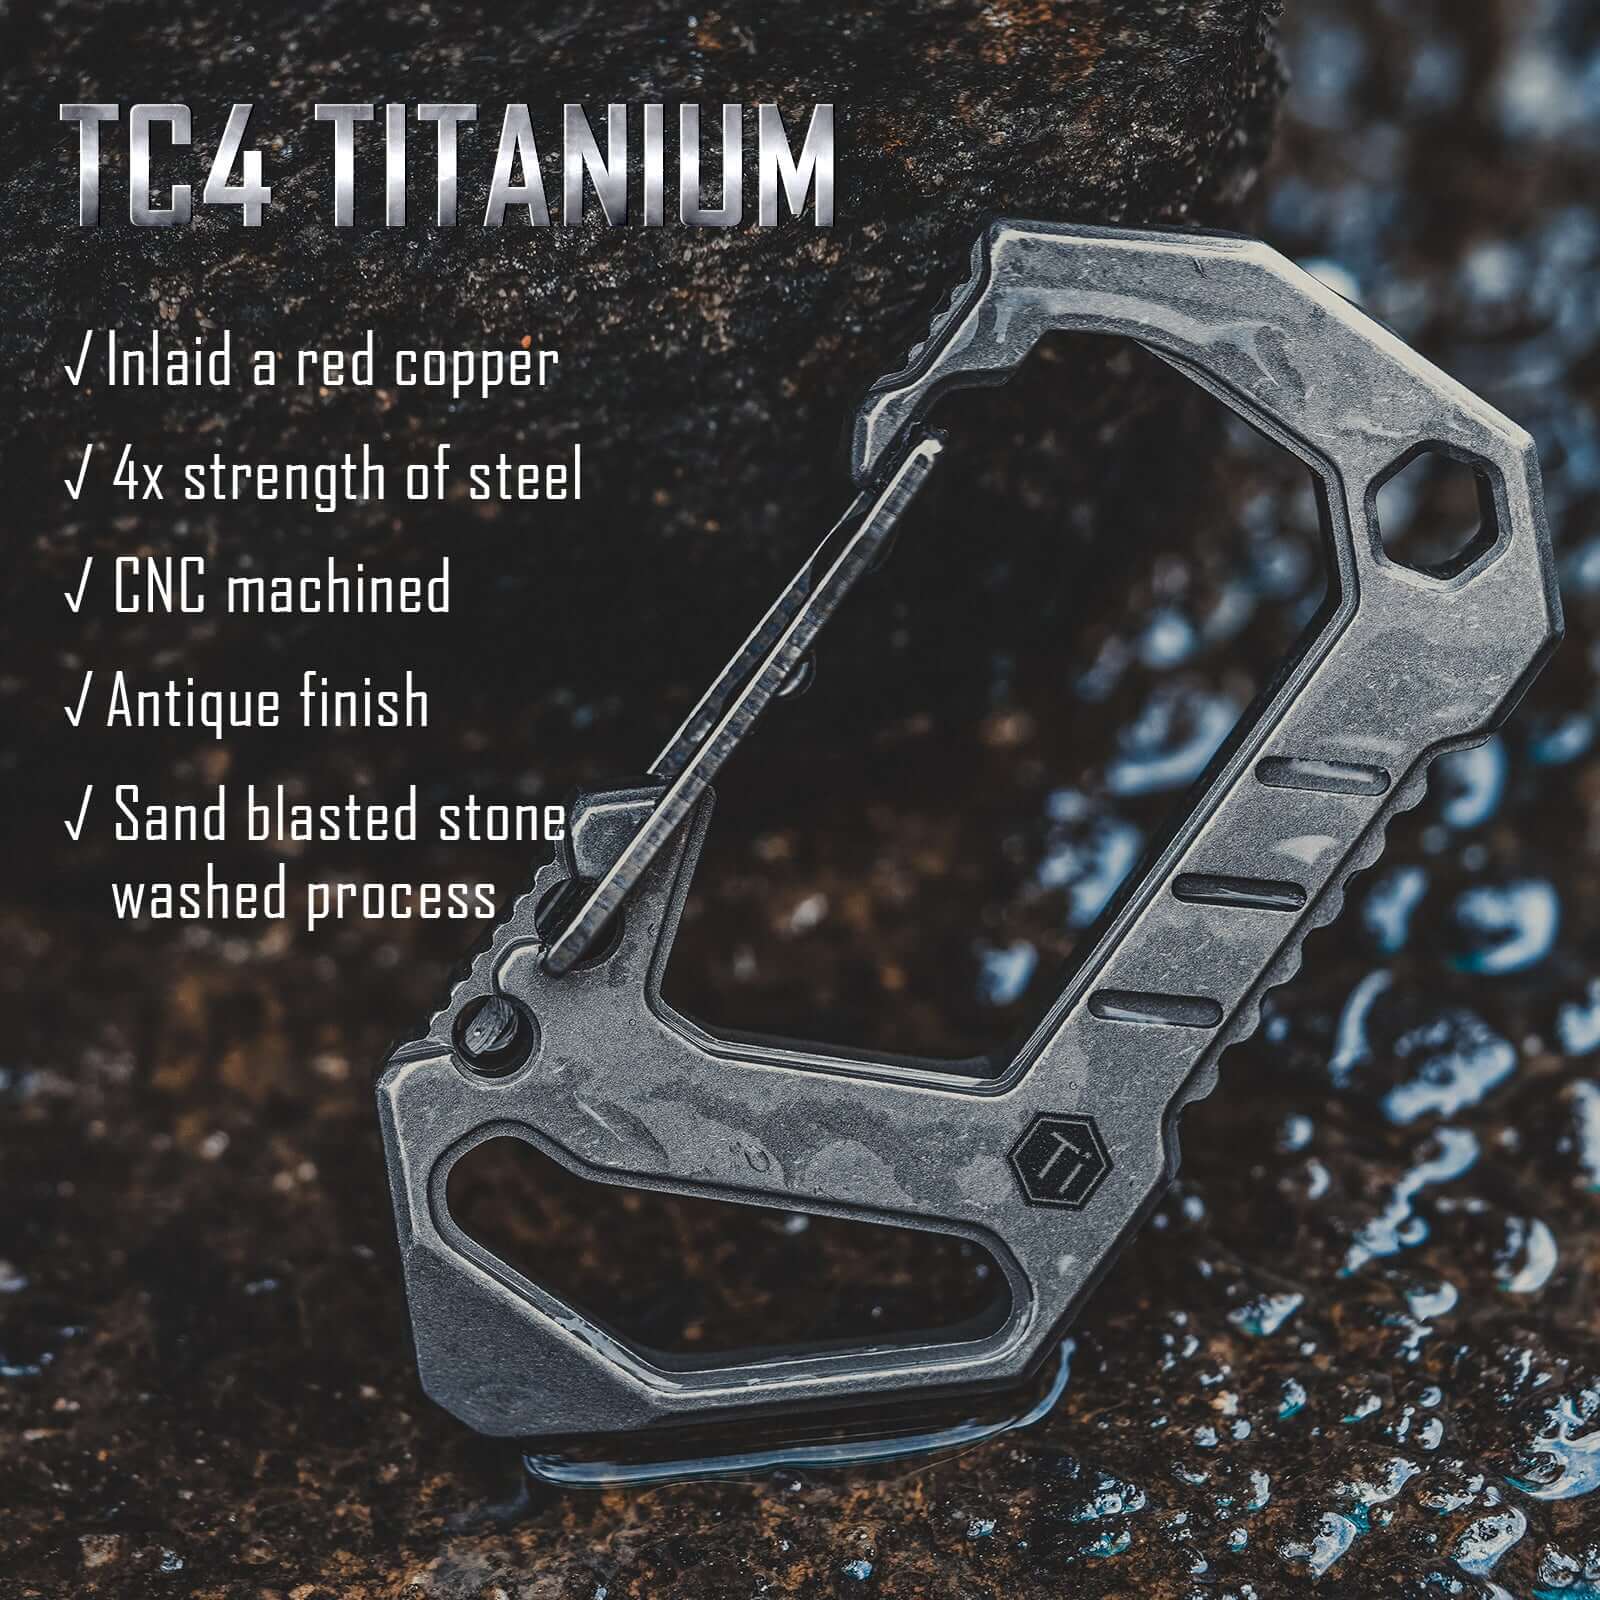 KeyUnity KU03 Titanium EDC 6 in 1 Multi-tool Quick Release Carabiner